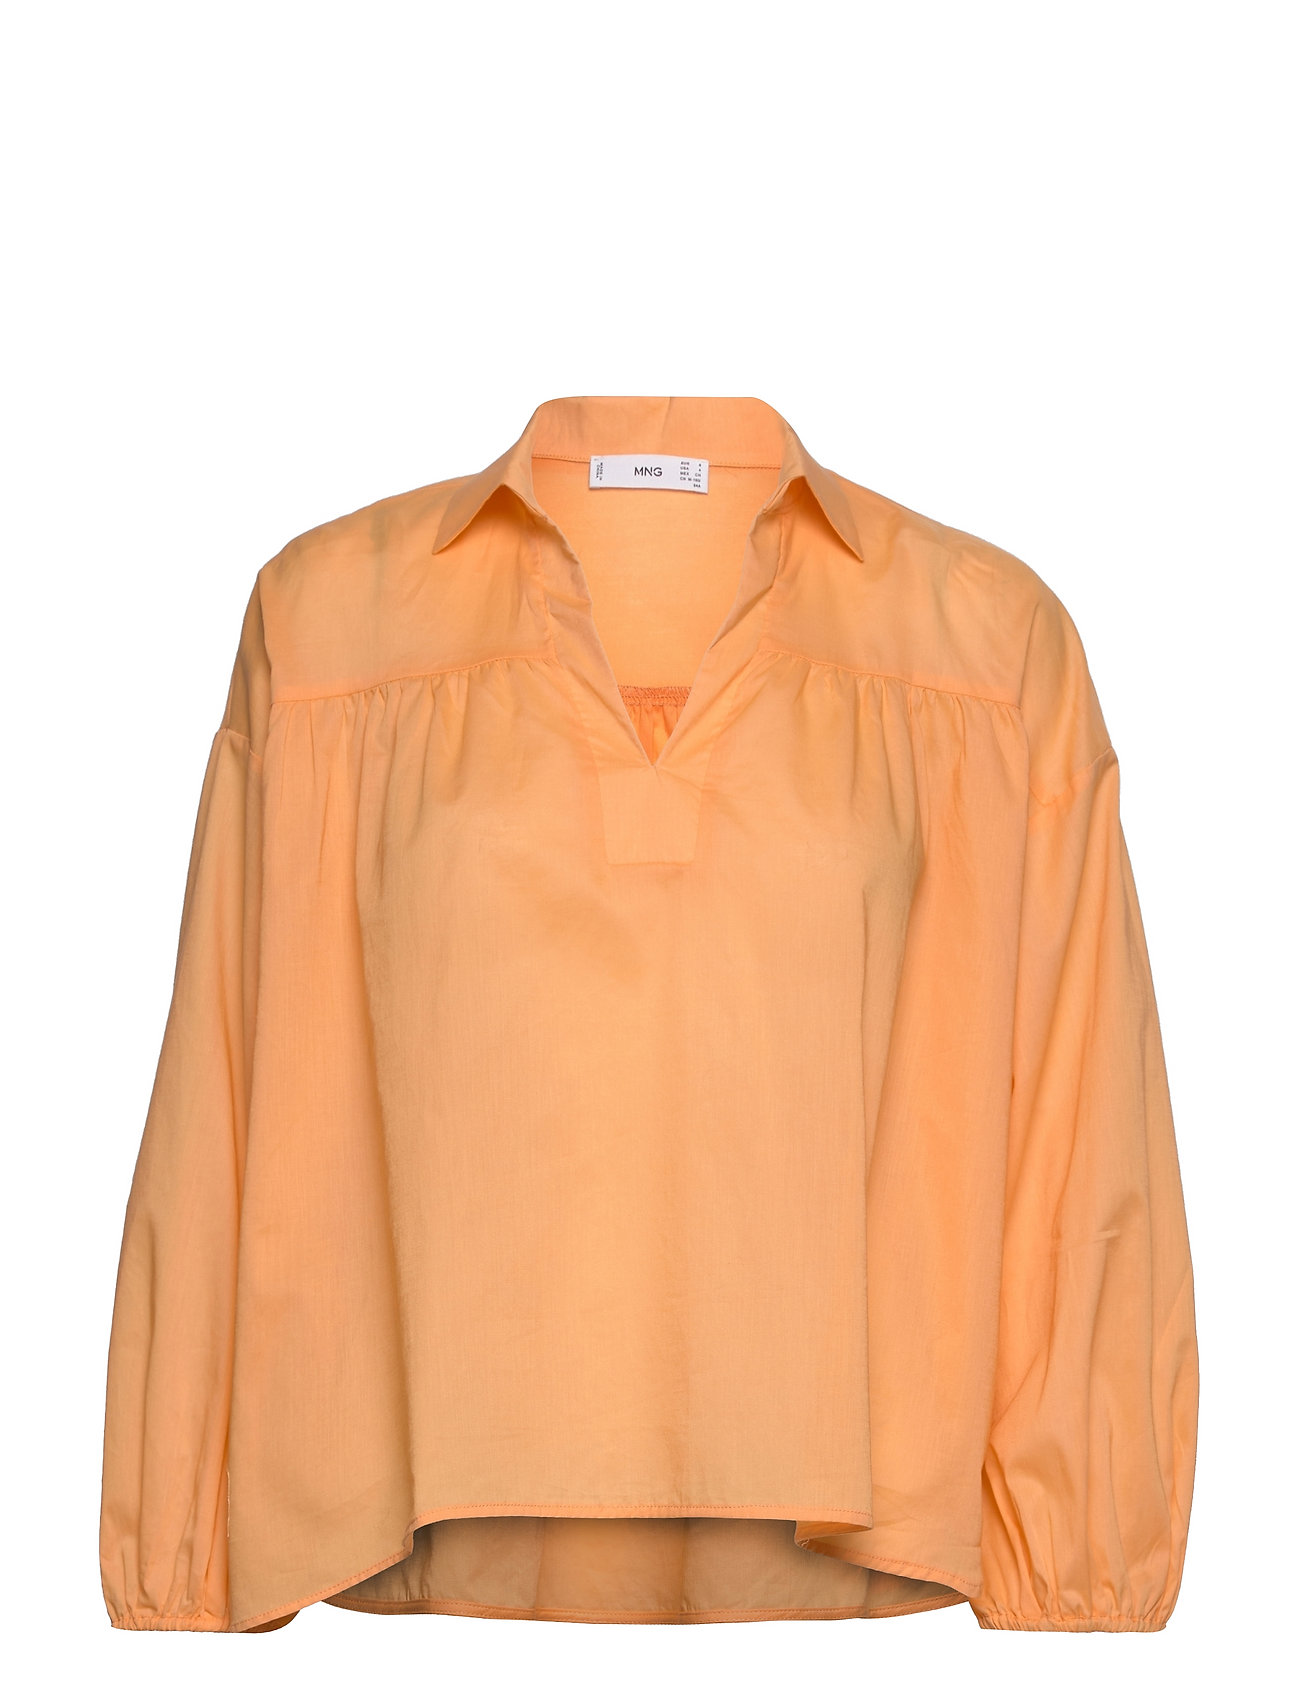 100% Cotton Blouse Tops Blouses Long-sleeved Orange Mango